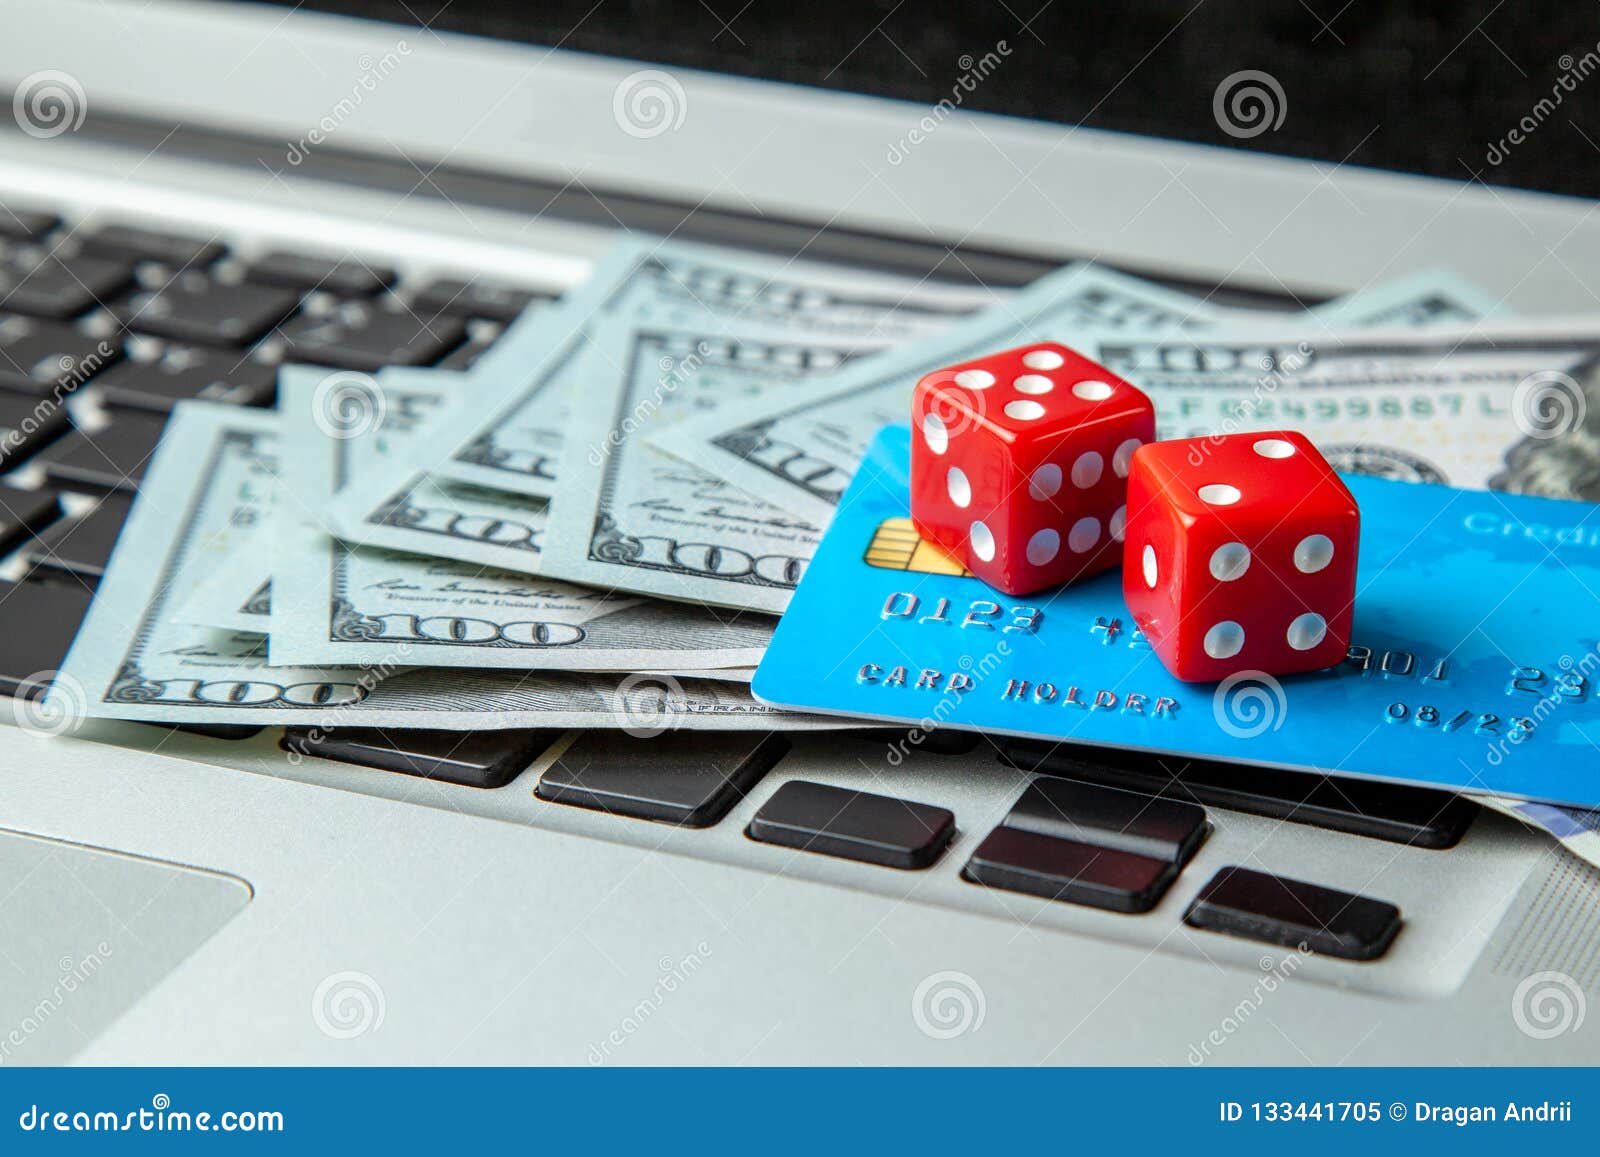 Онлайн казино на доллары промокод для казино агро